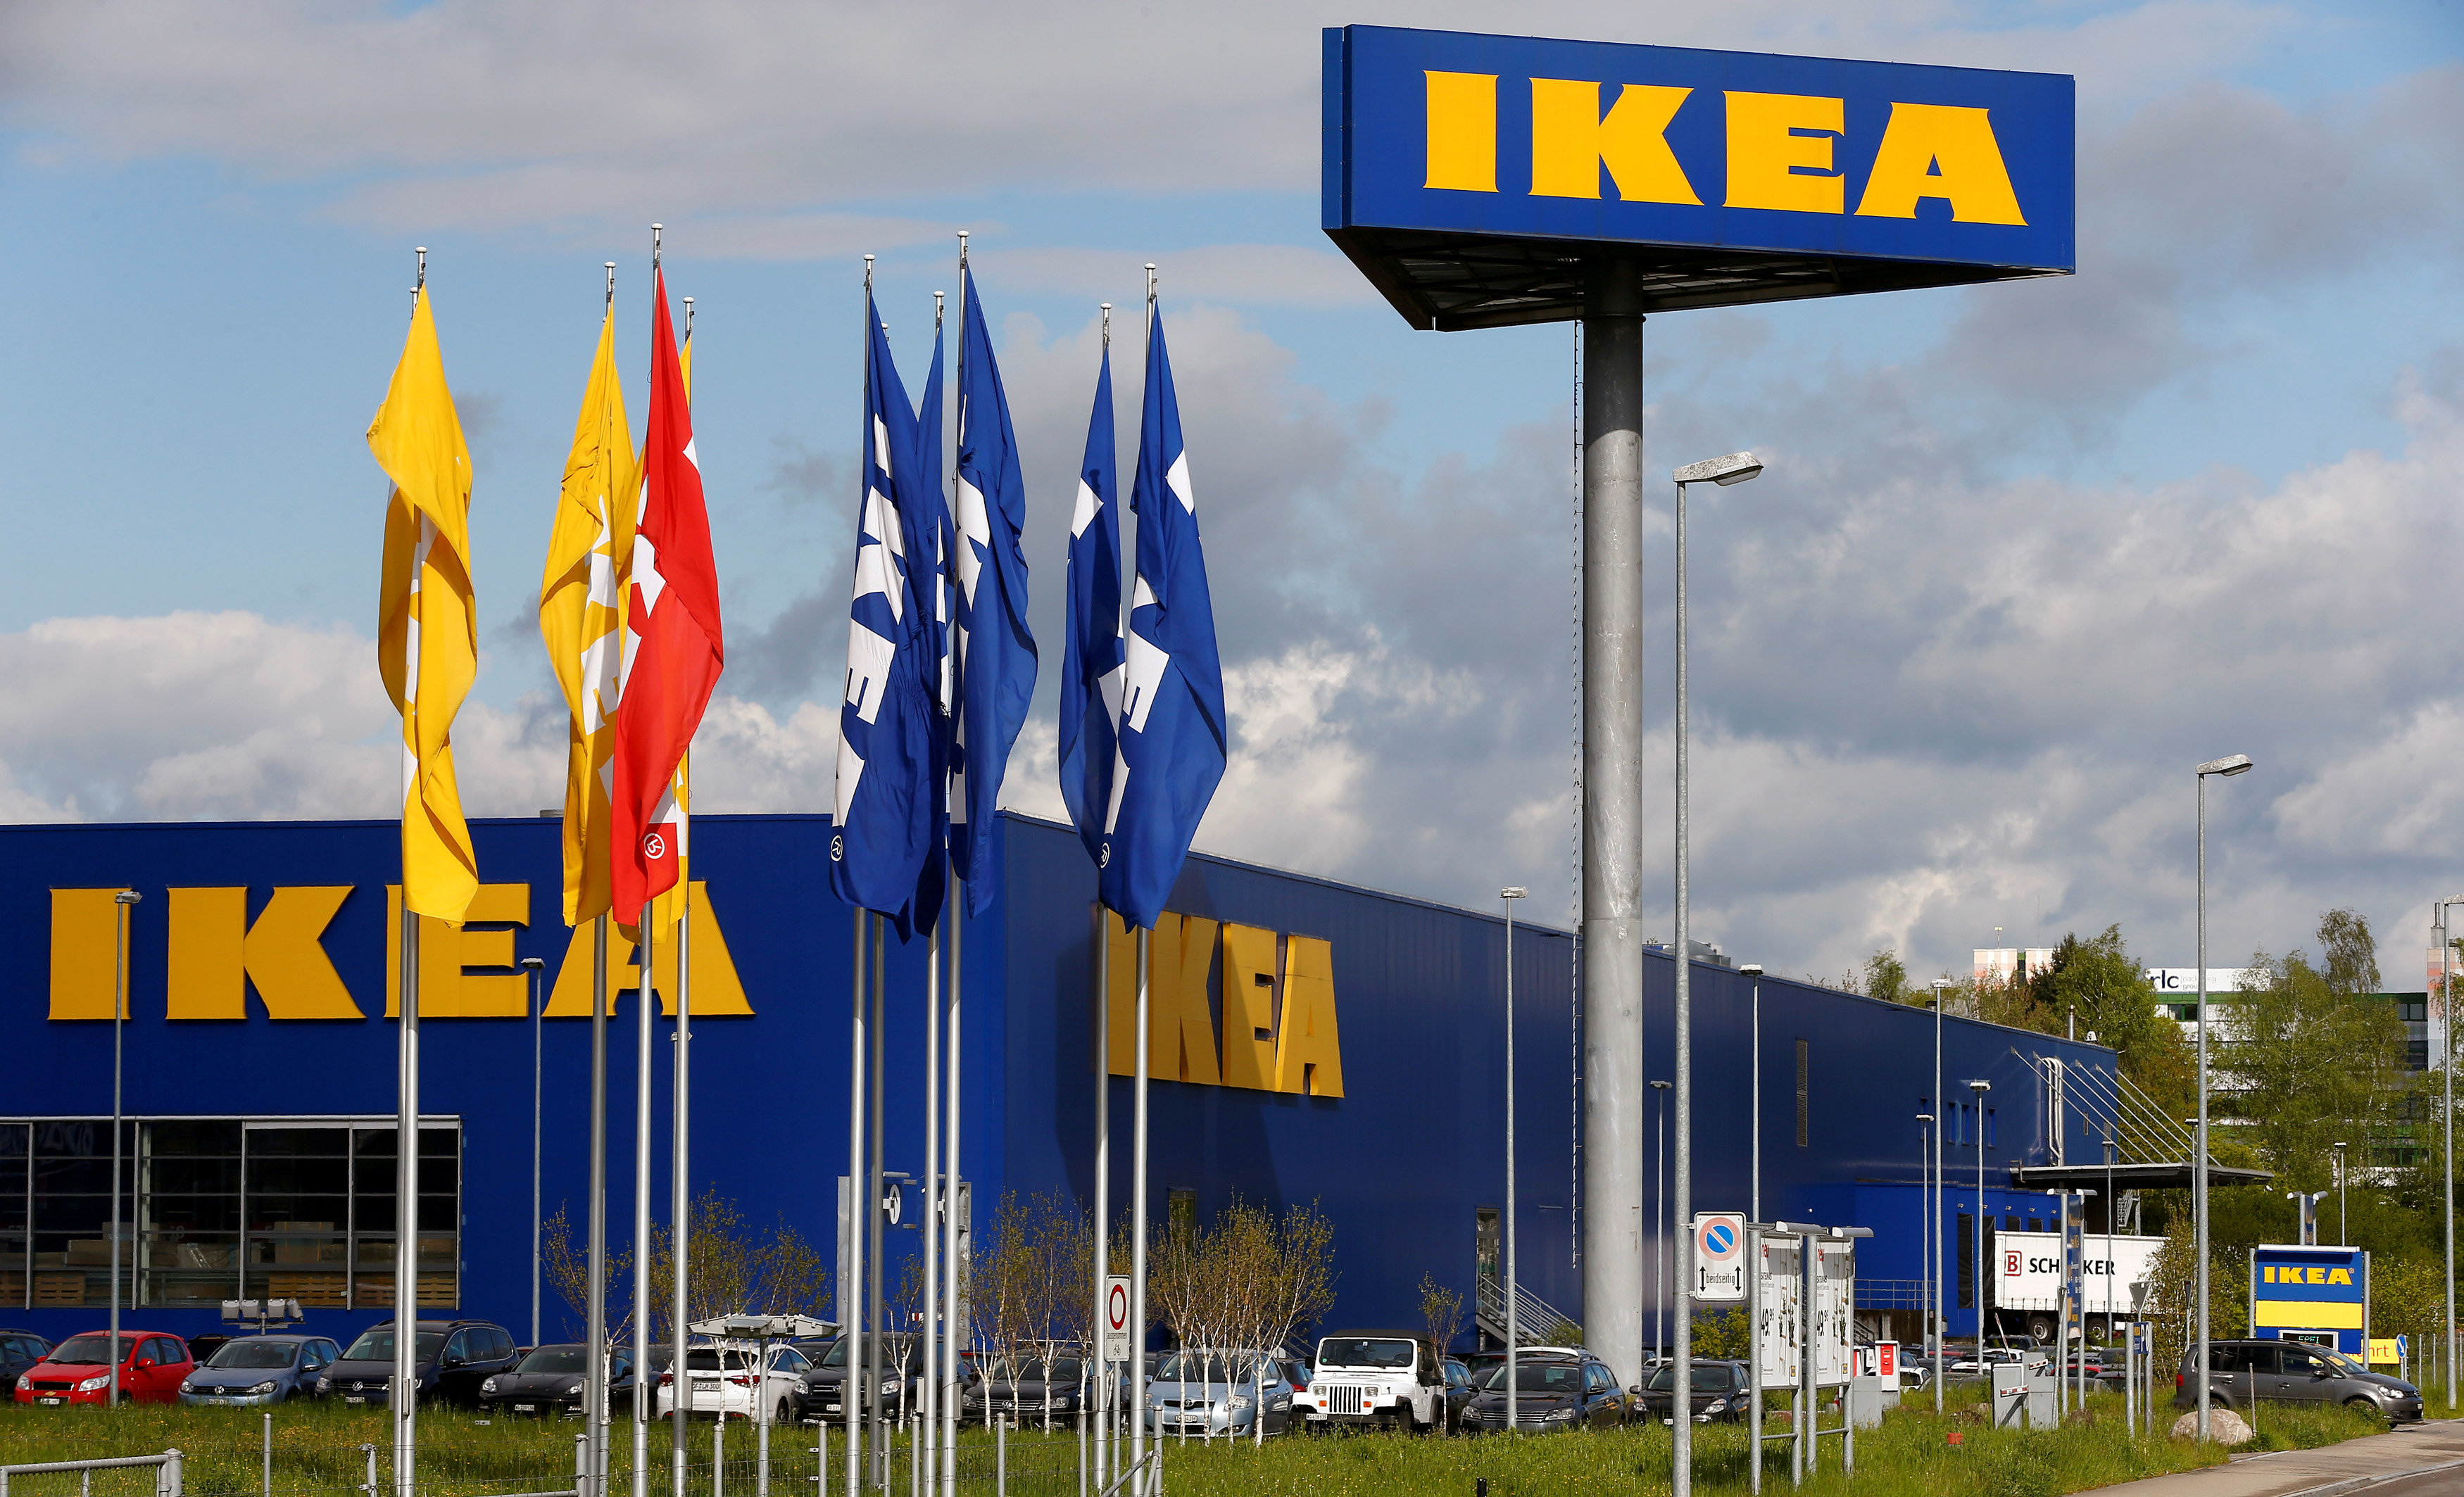 The company's logo is seen outside of an IKEA Group store in Spreitenbach, Switzerland on April 27, 2016. (Arnd Wiegmann—Reuters)